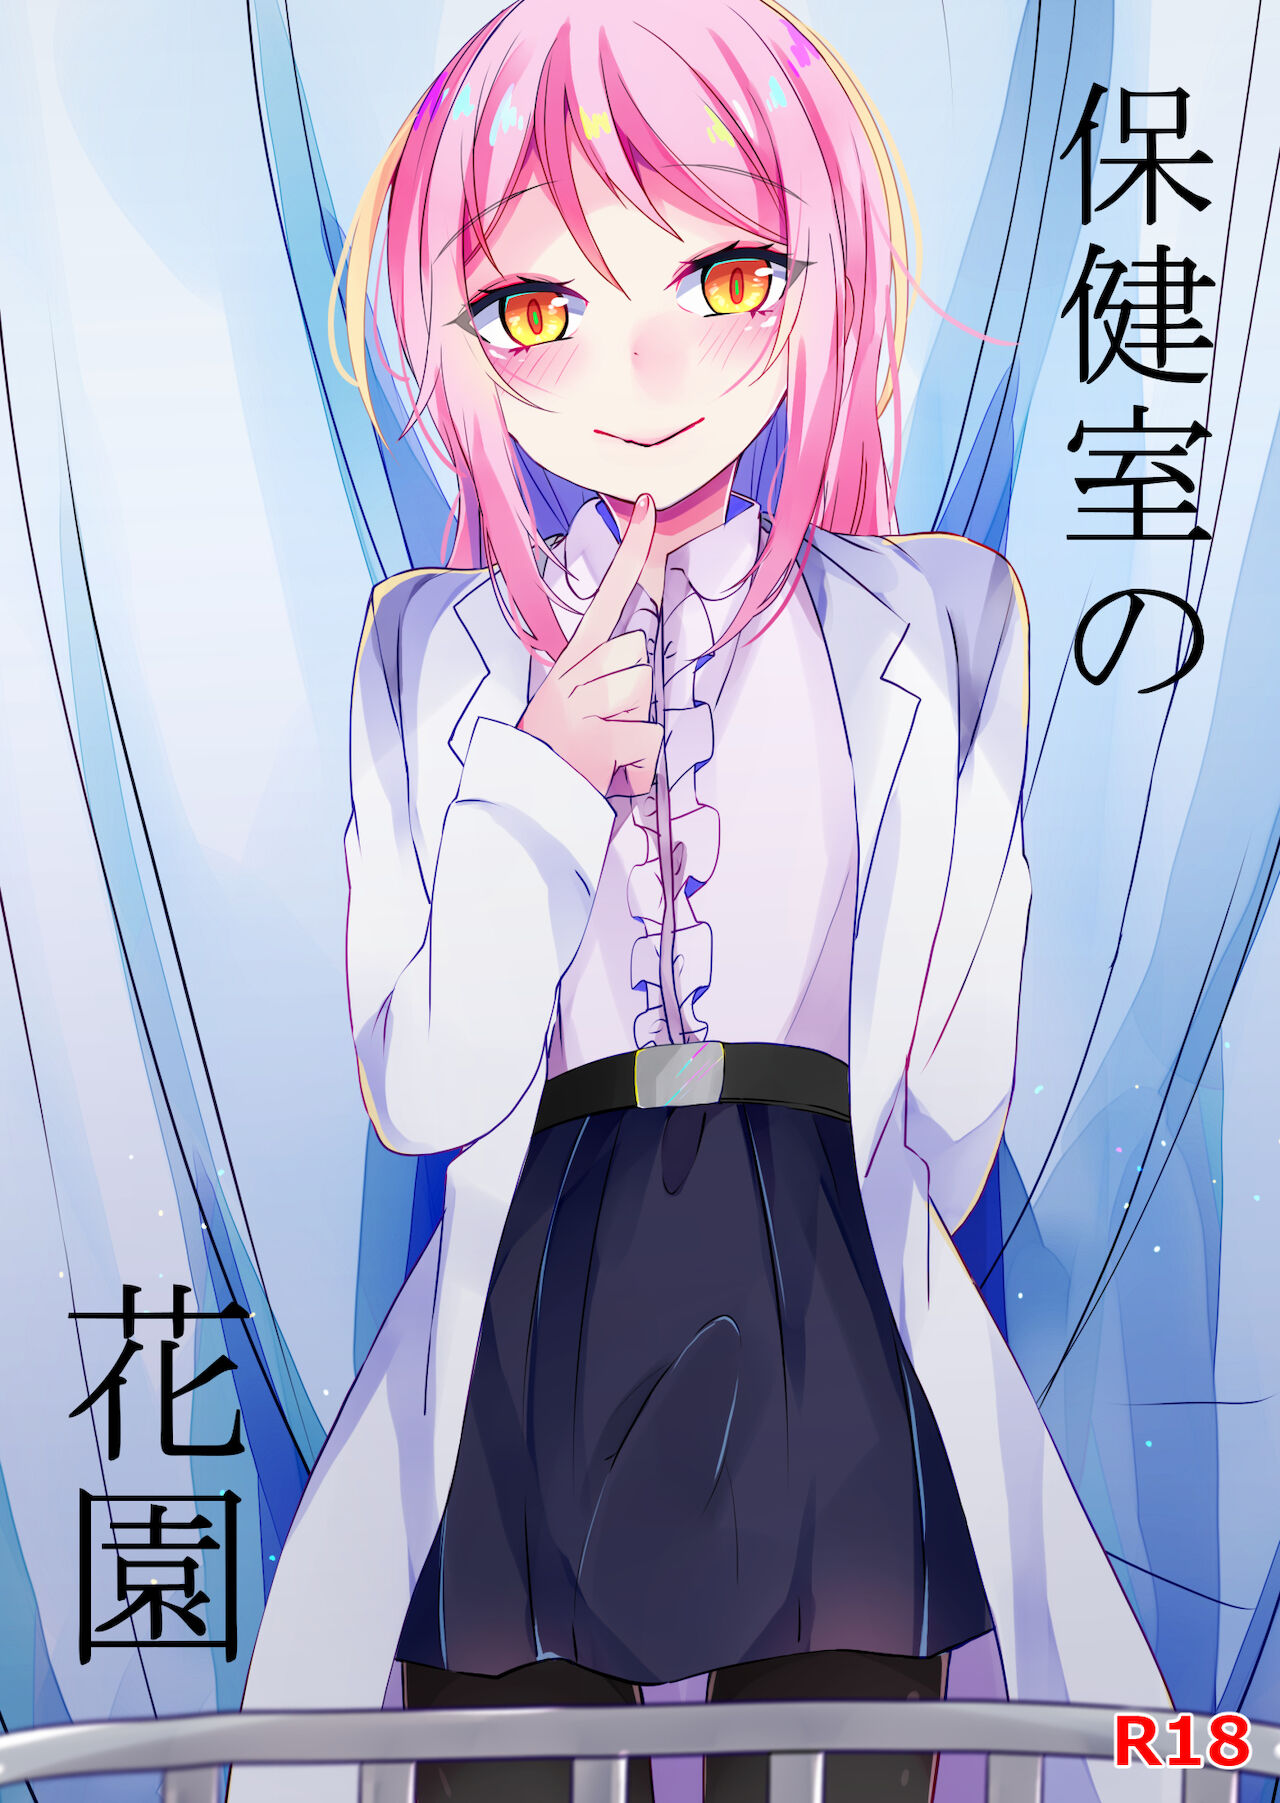 Hanazono-sensei of the School Infirmary manga